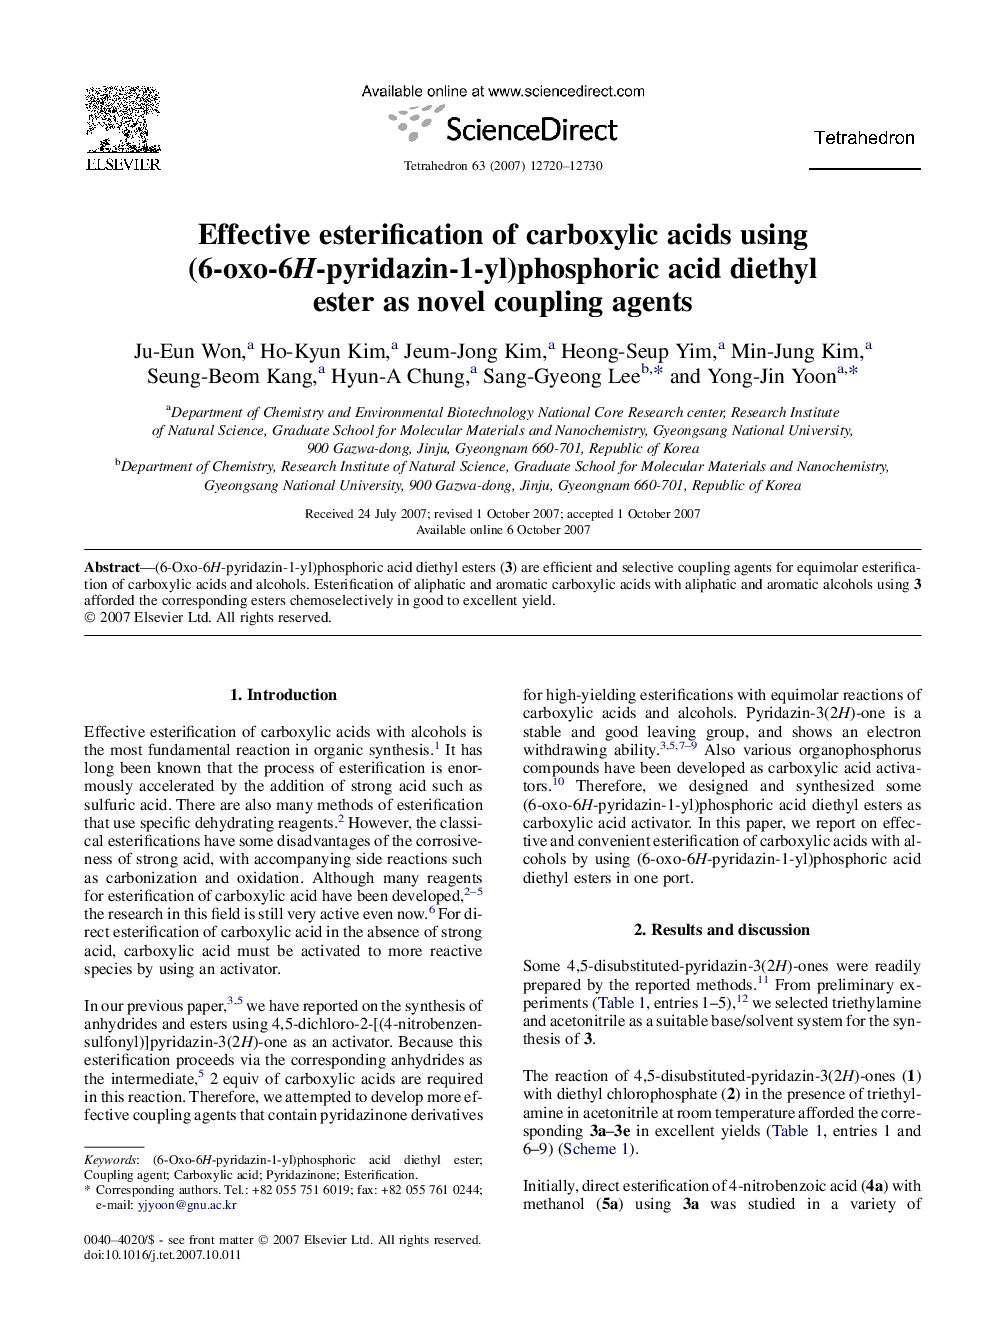 Effective esterification of carboxylic acids using (6-oxo-6H-pyridazin-1-yl)phosphoric acid diethyl ester as novel coupling agents